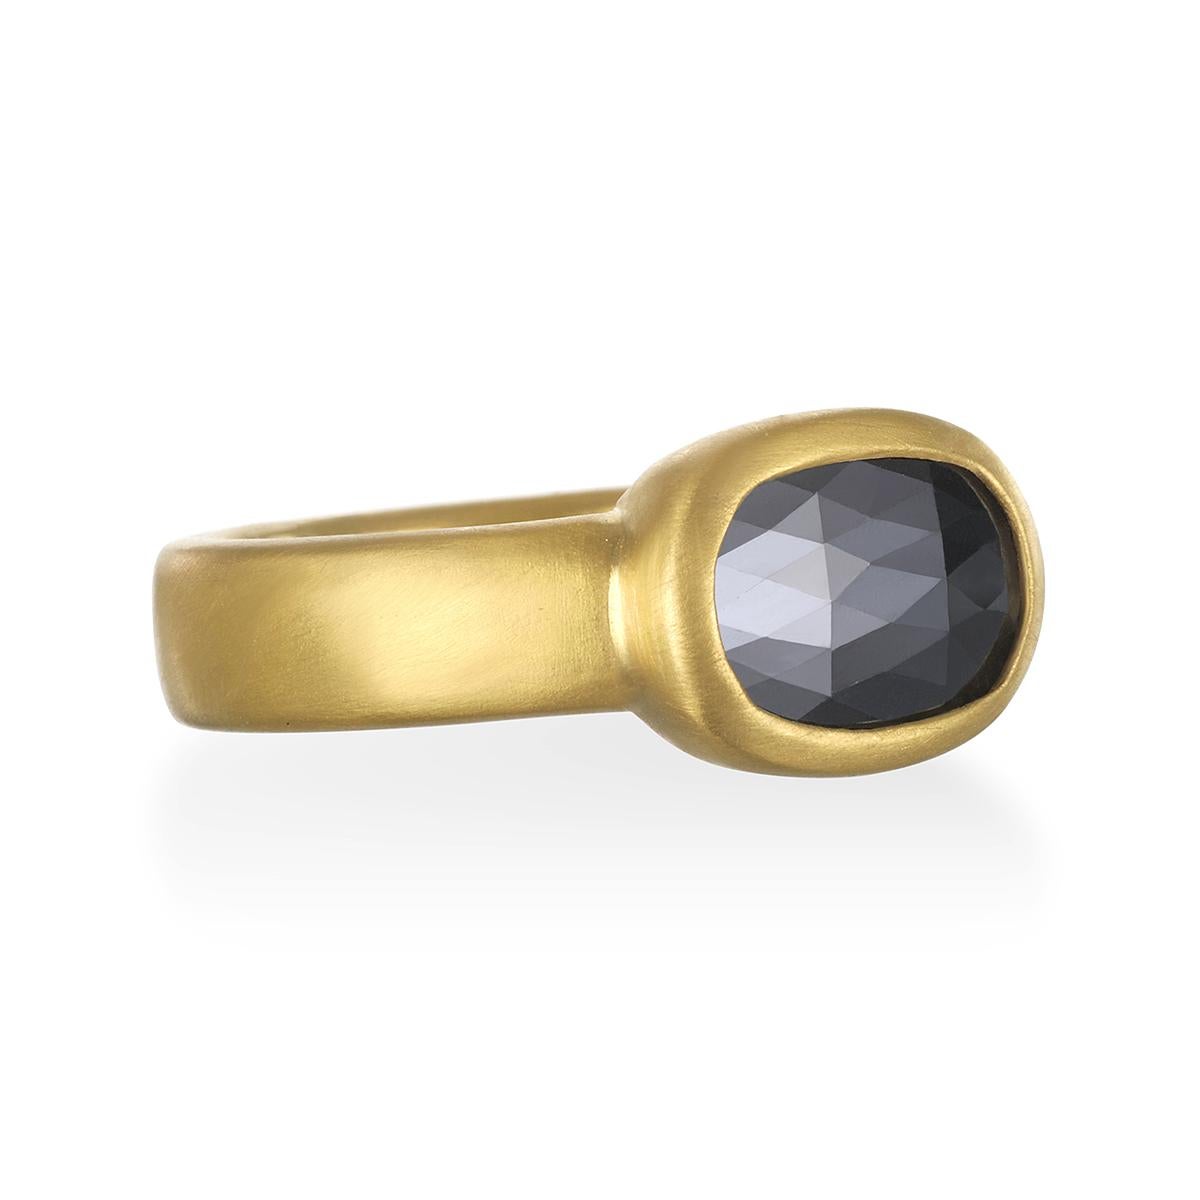 Faye Kim 22 Karat Gold Black Diamond Bezel Ring 

Black Diamond 1.87 cts

Square shank 5 x 2.4mm

Size 7.5 - can be resized

Made in the USA

